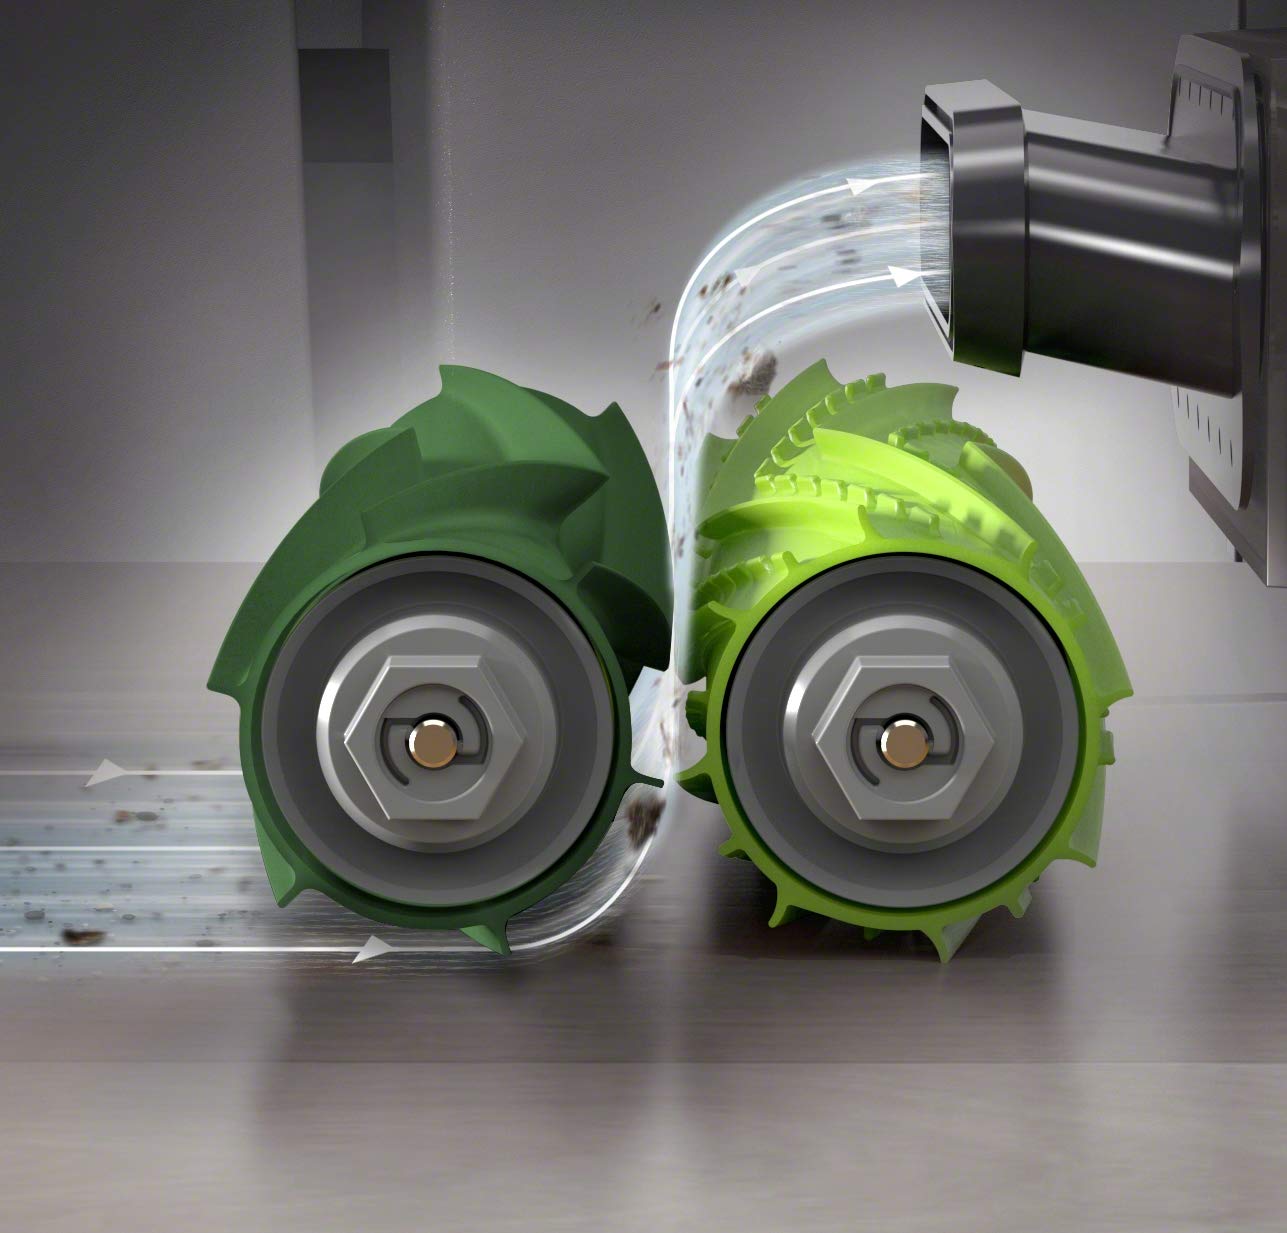 L'aspirateur robot Roomba iRobot e5154 voit son prix chuter sous